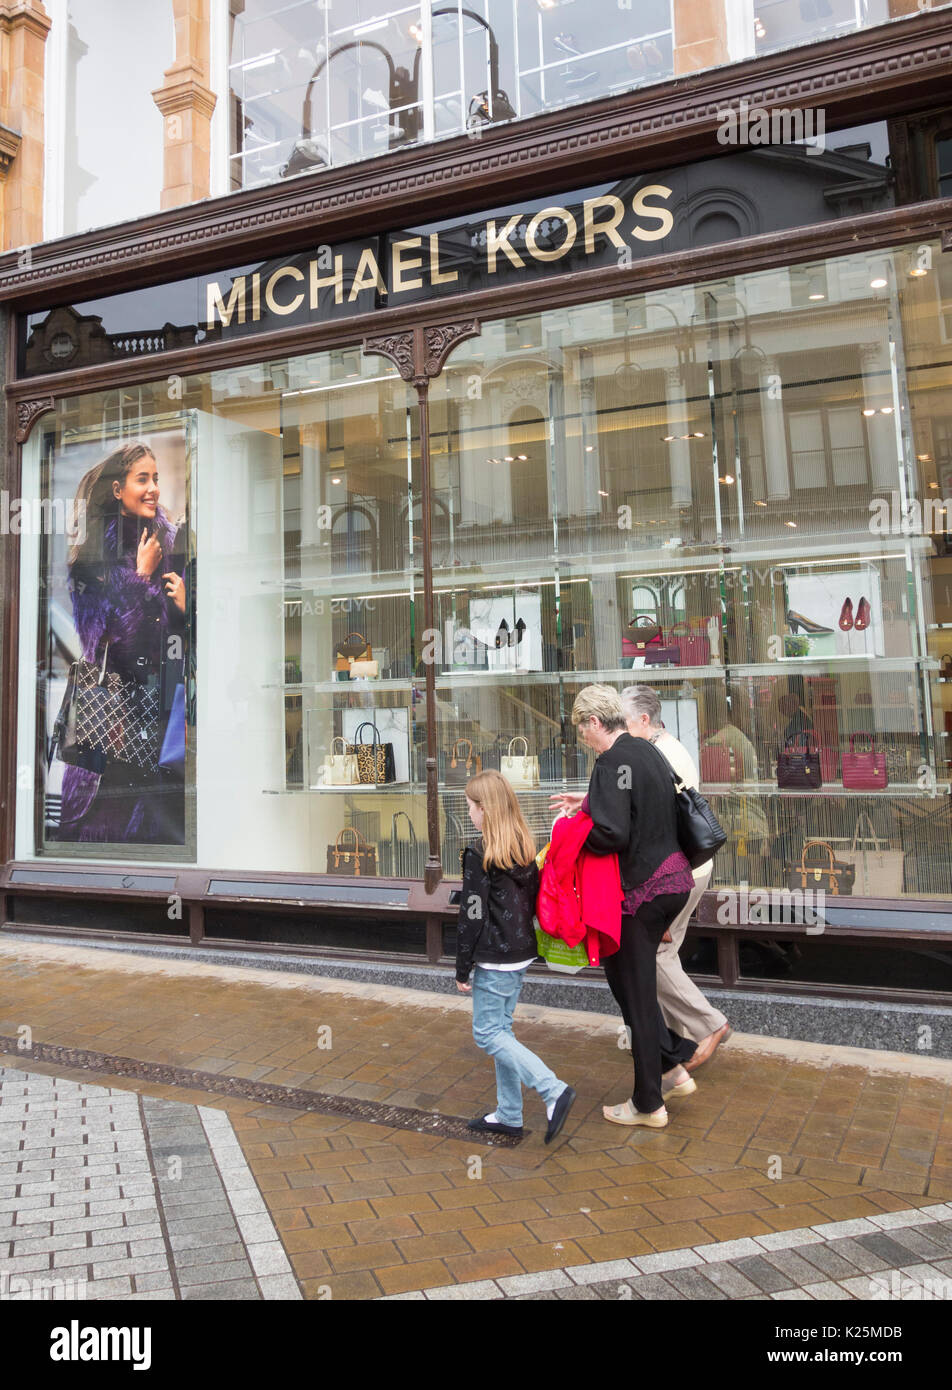 Michael Kors store, Leeds, Yorkshire, England, UK Stock Photo - Alamy